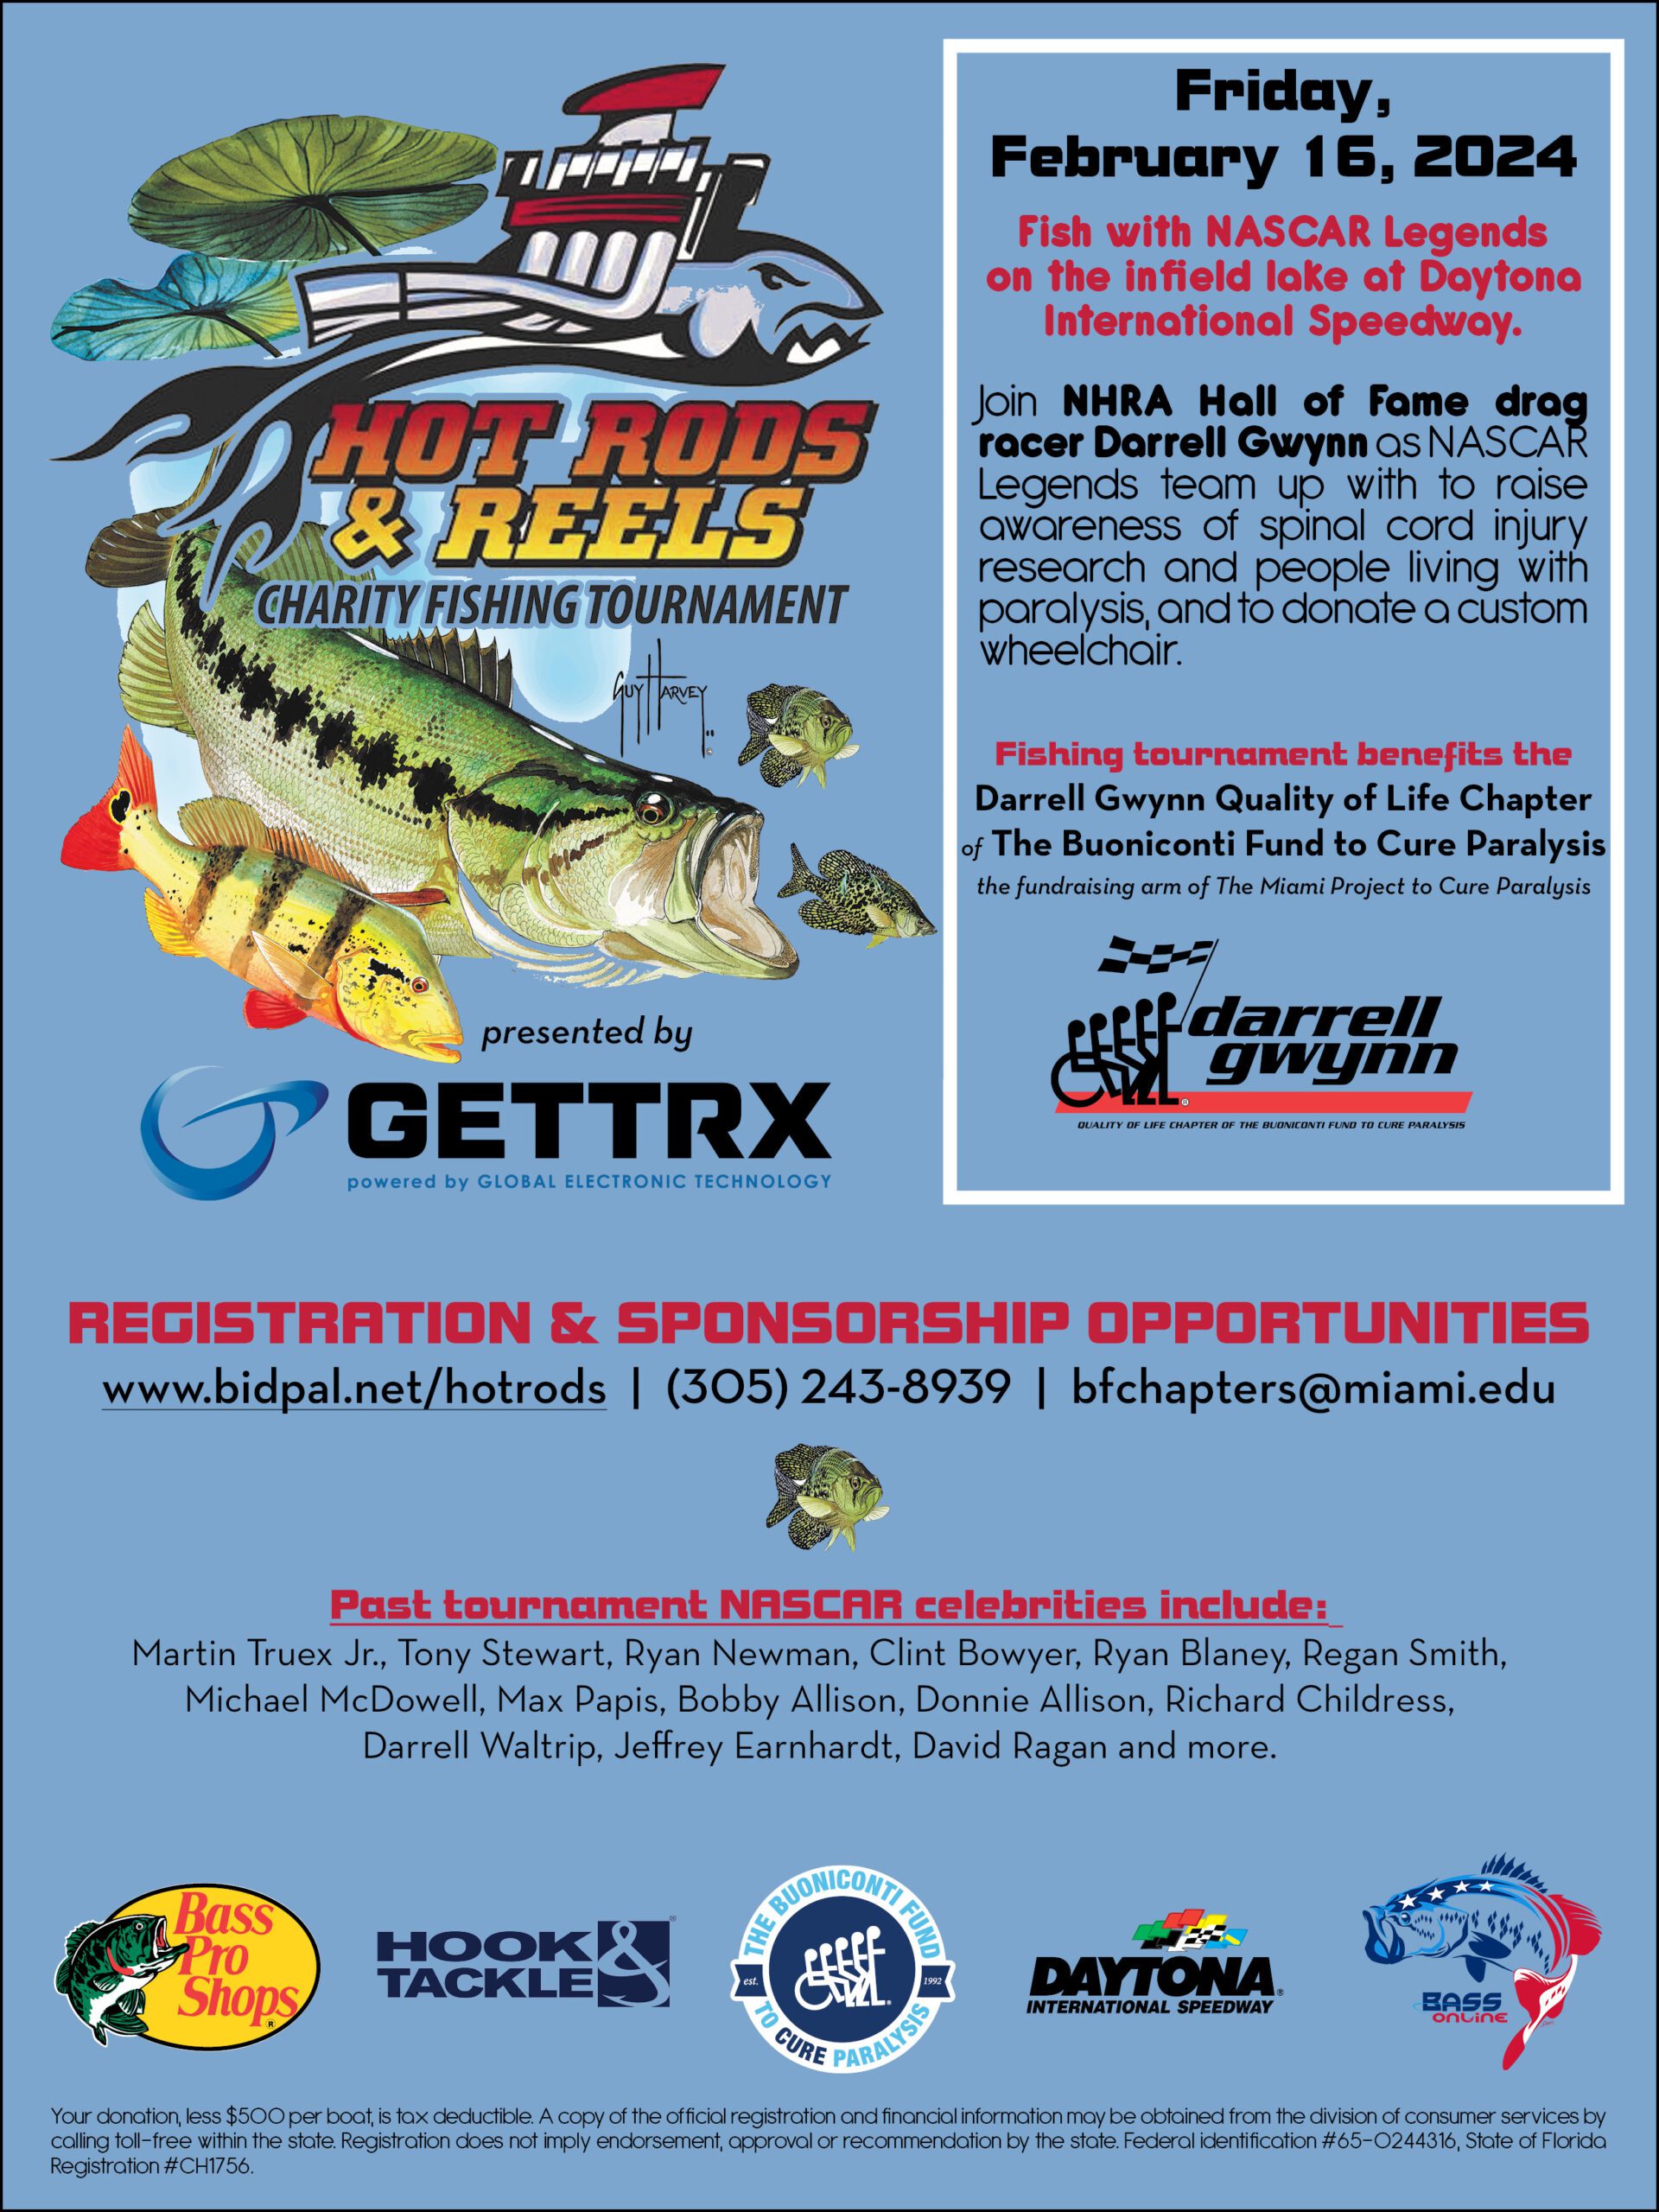 Hot Rods & Reels Charity Fishing Tournament Daytona 2024 - The Miami Project